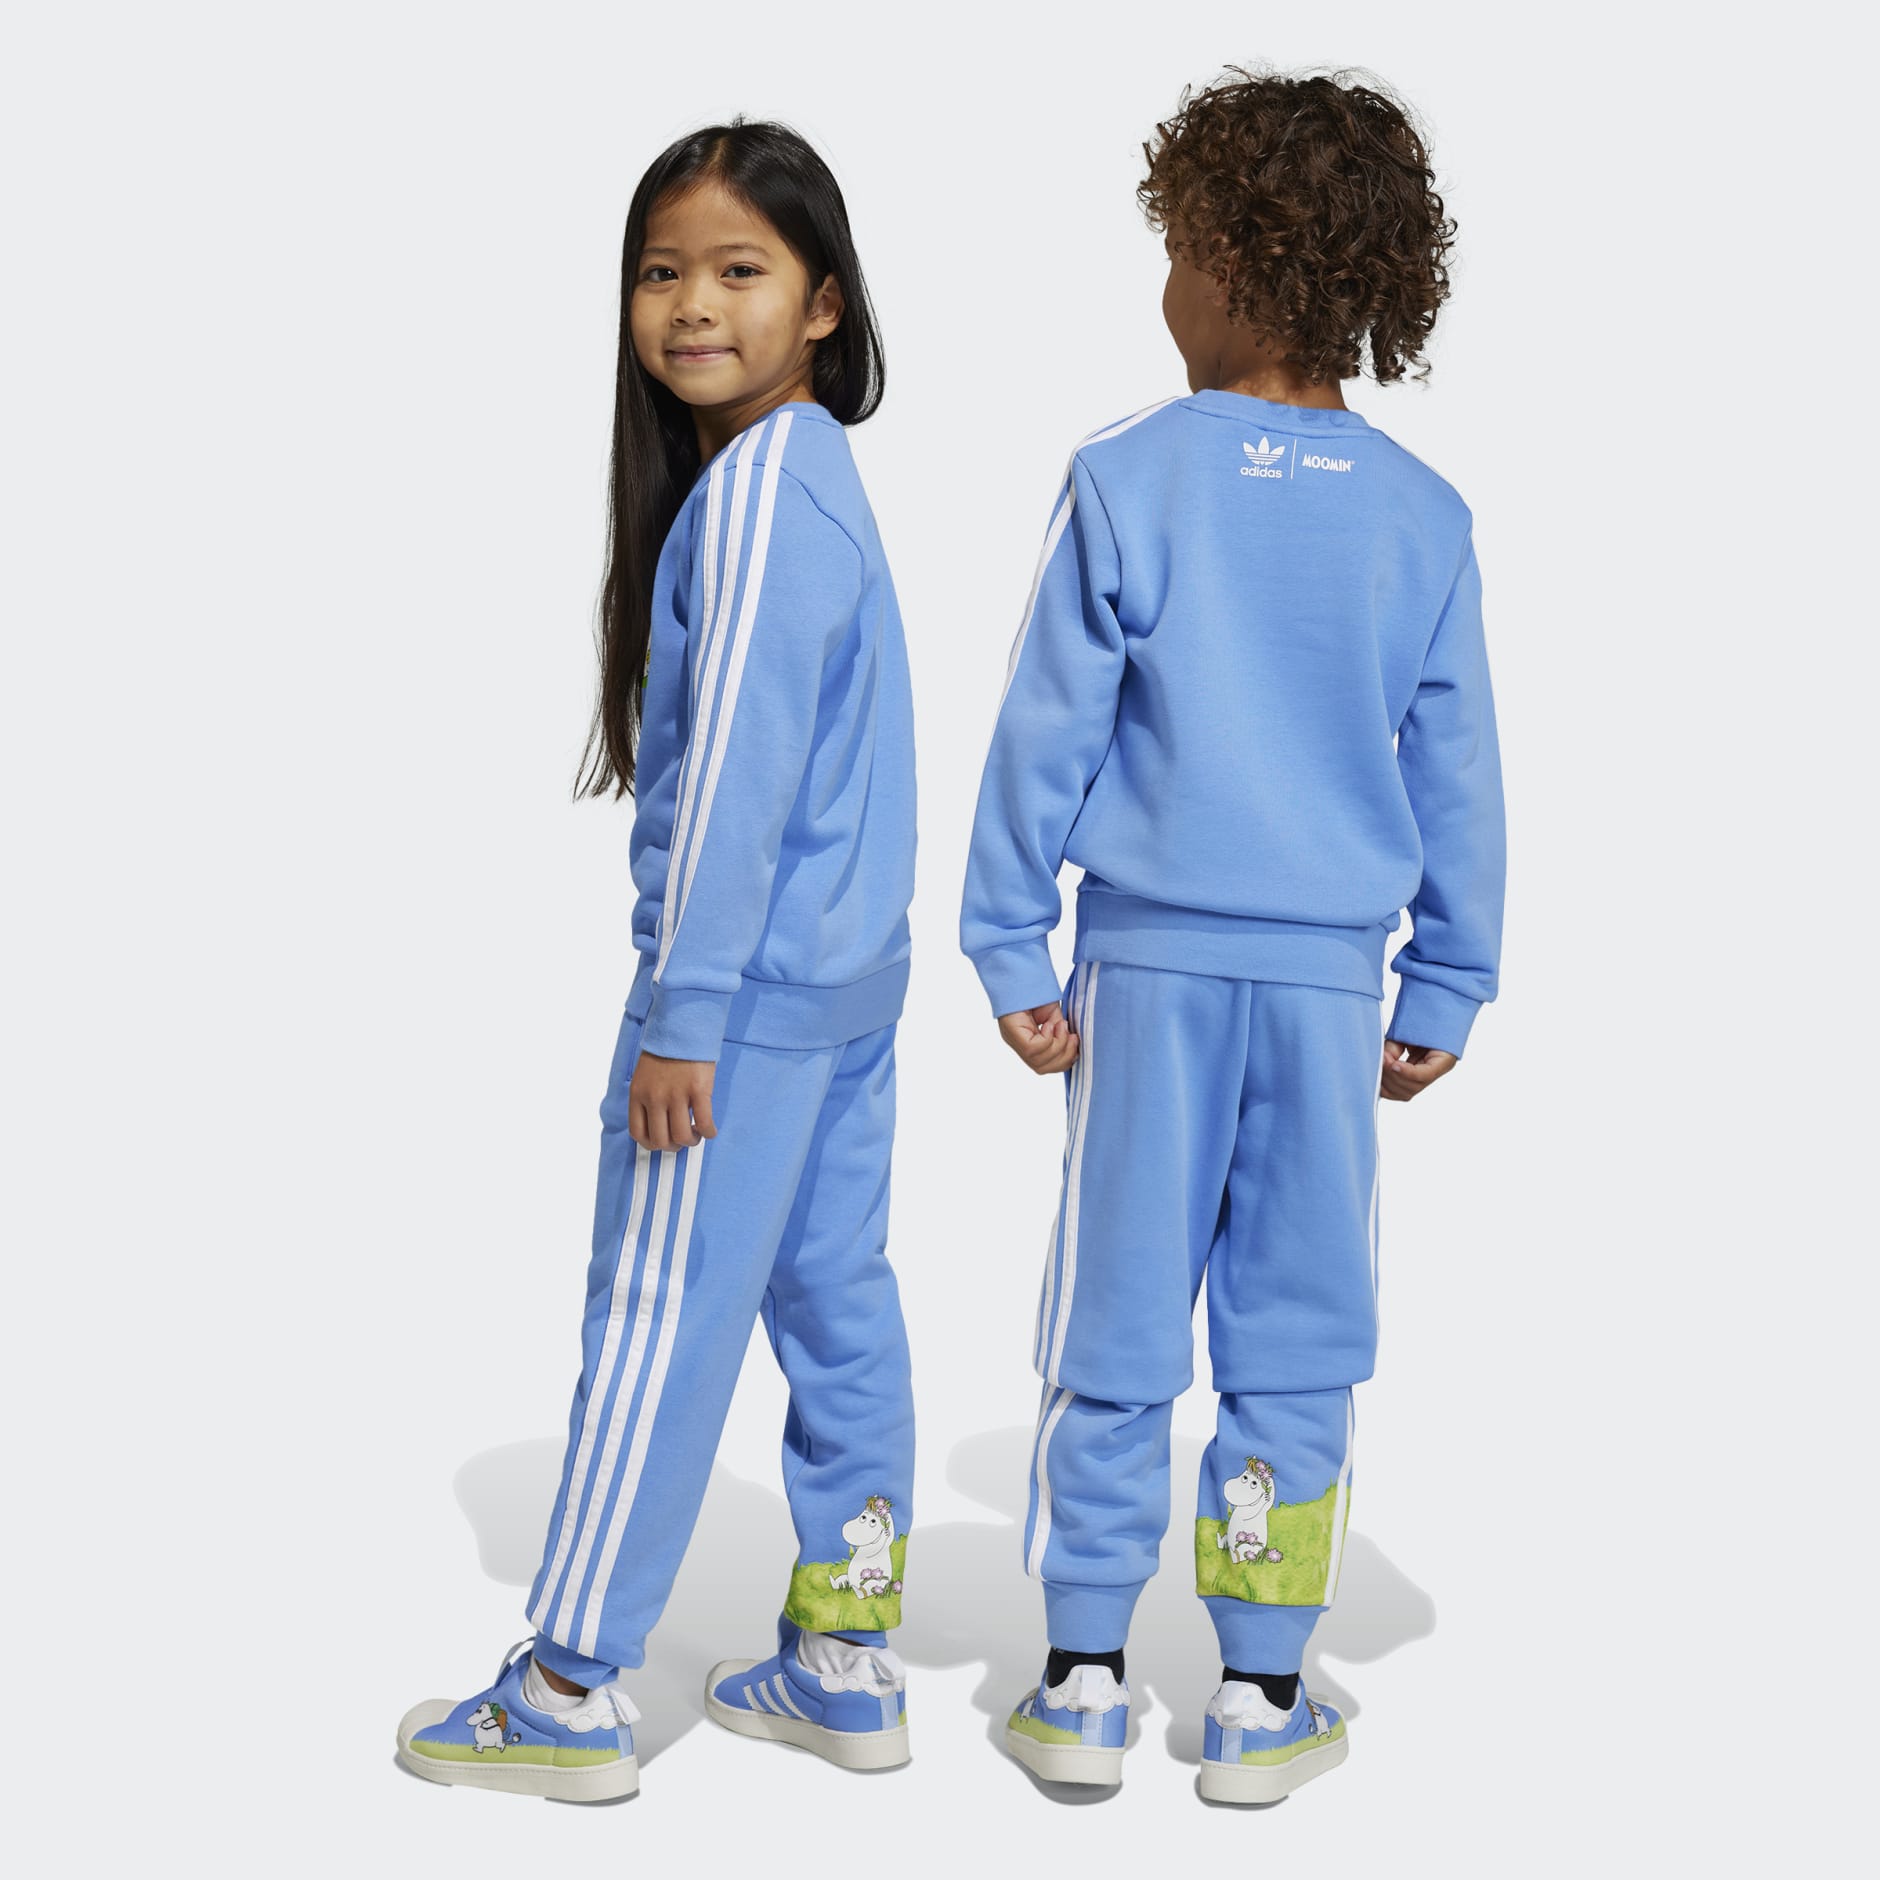 Kids Clothing - adidas Originals x Moomin Crew Set - Blue | adidas Egypt